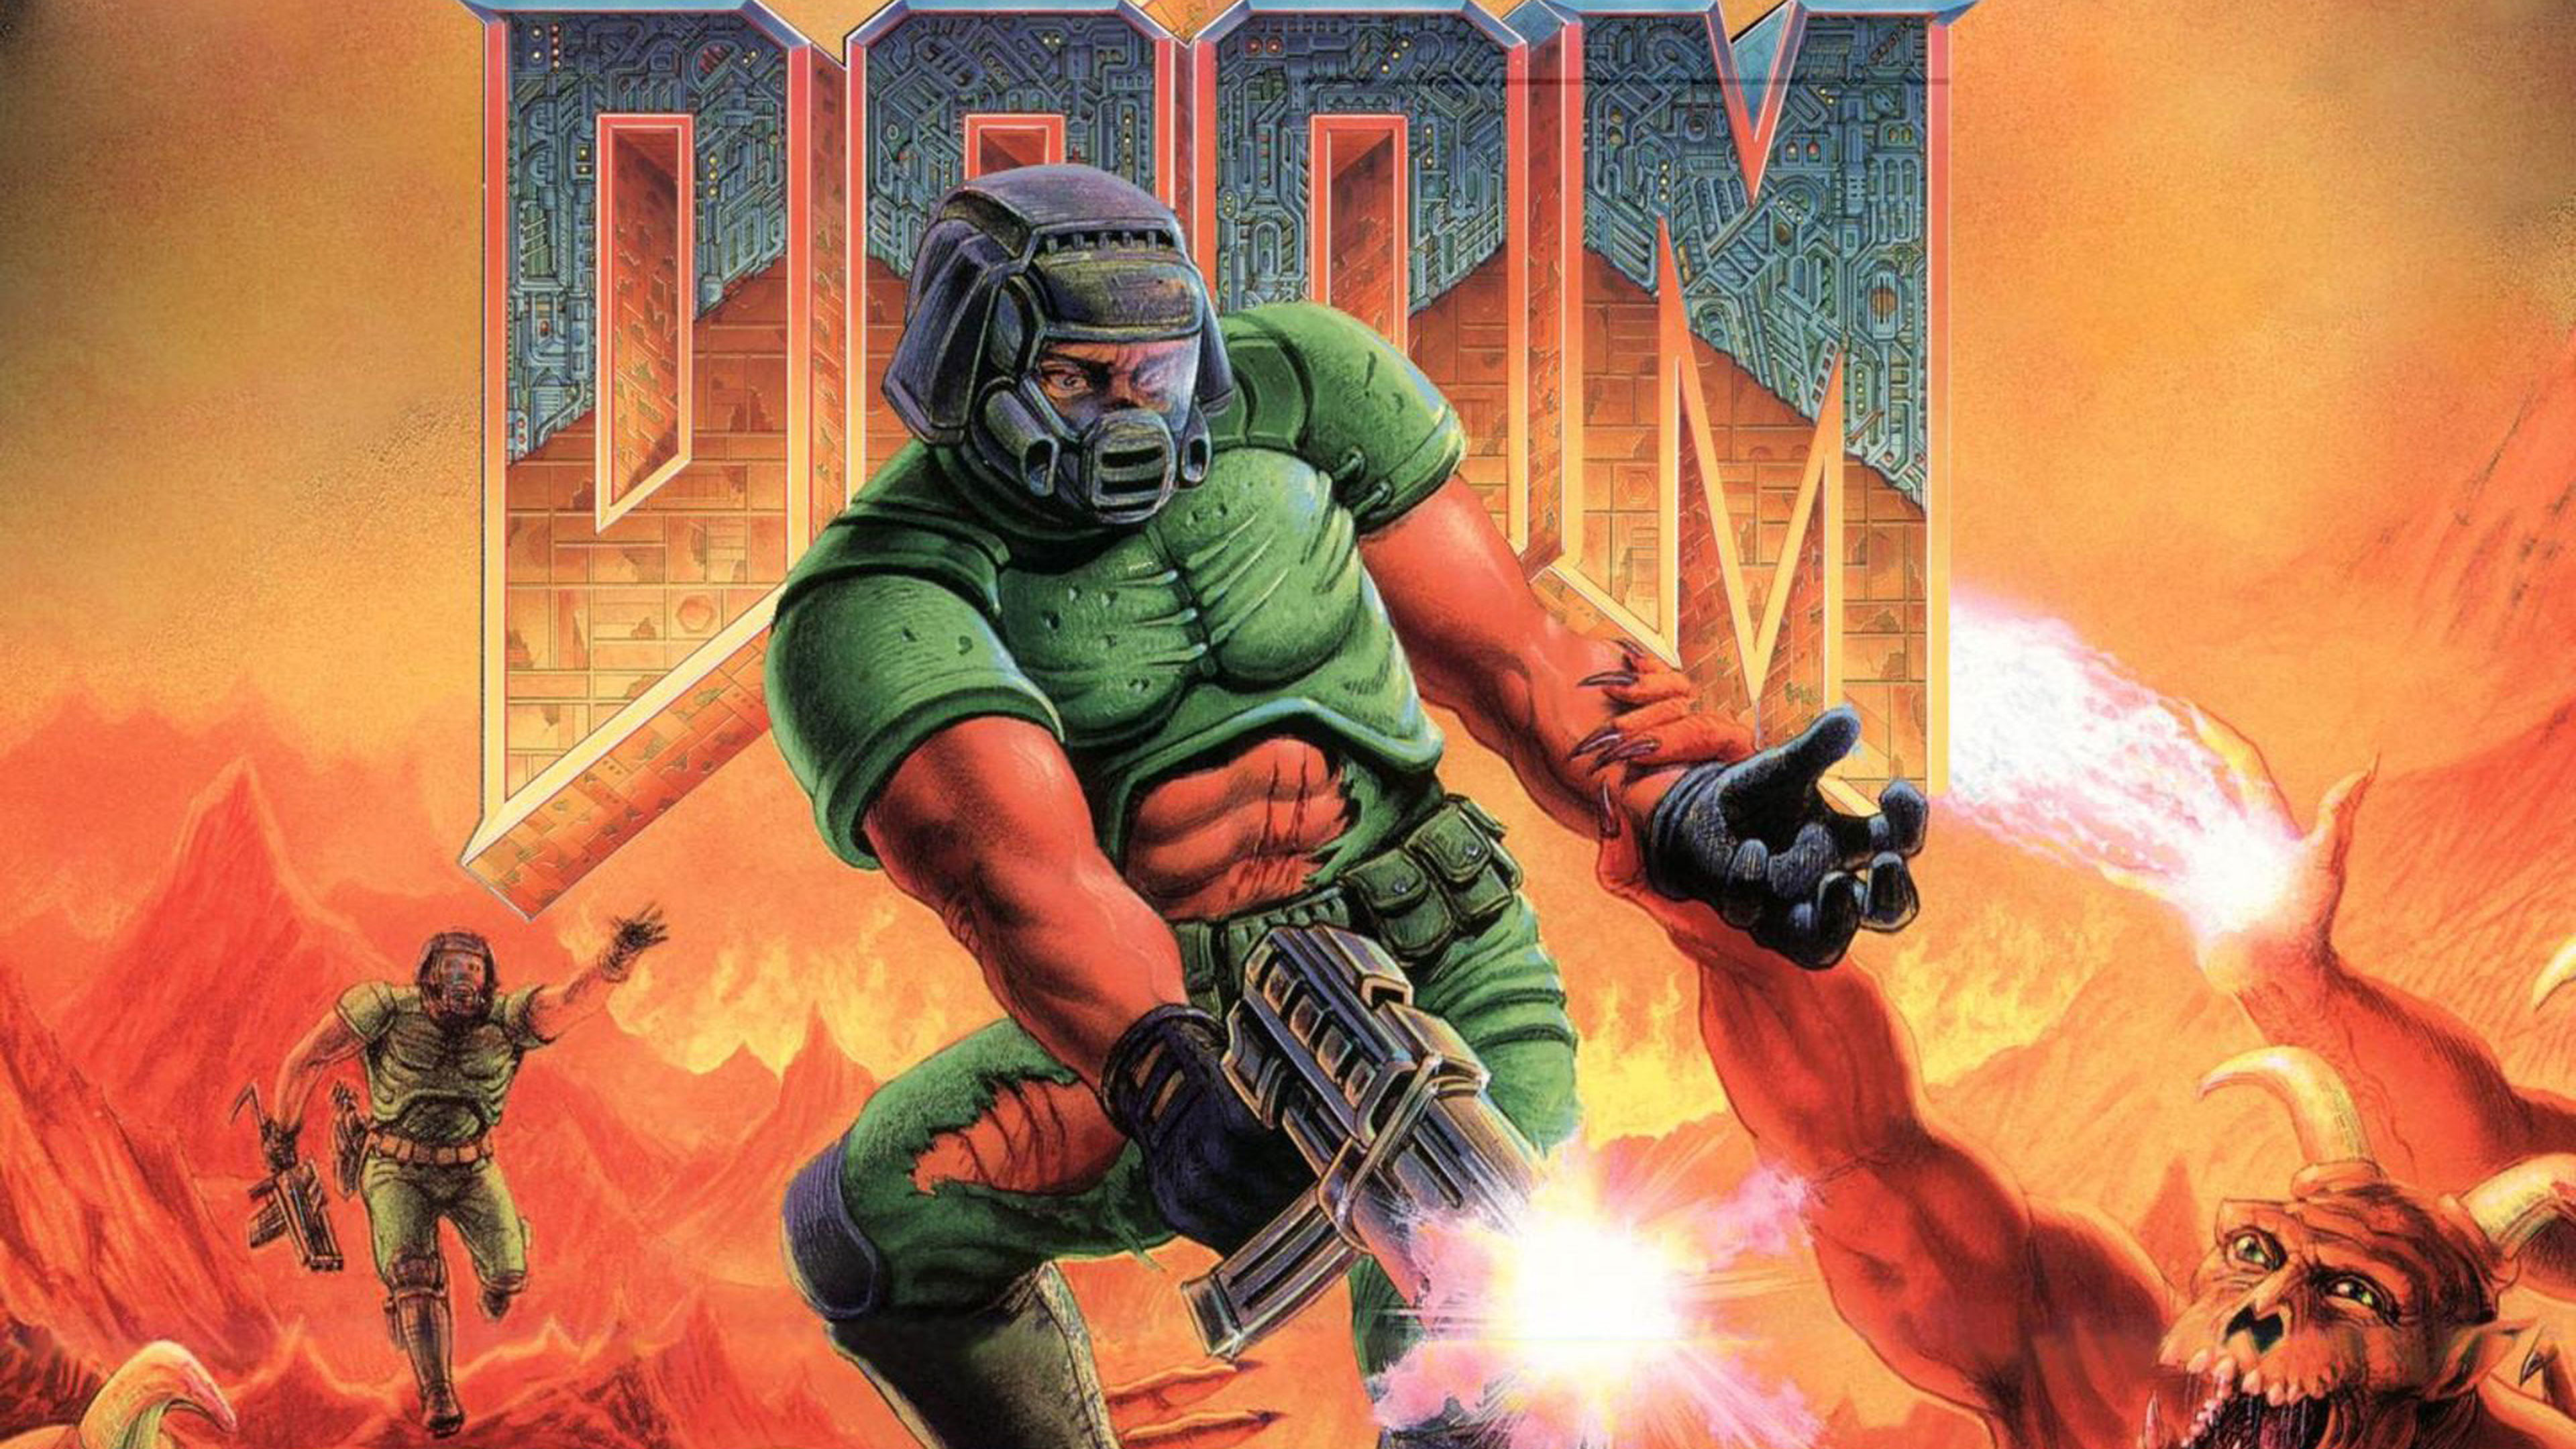 Doom II PC Cheat Codes Guide